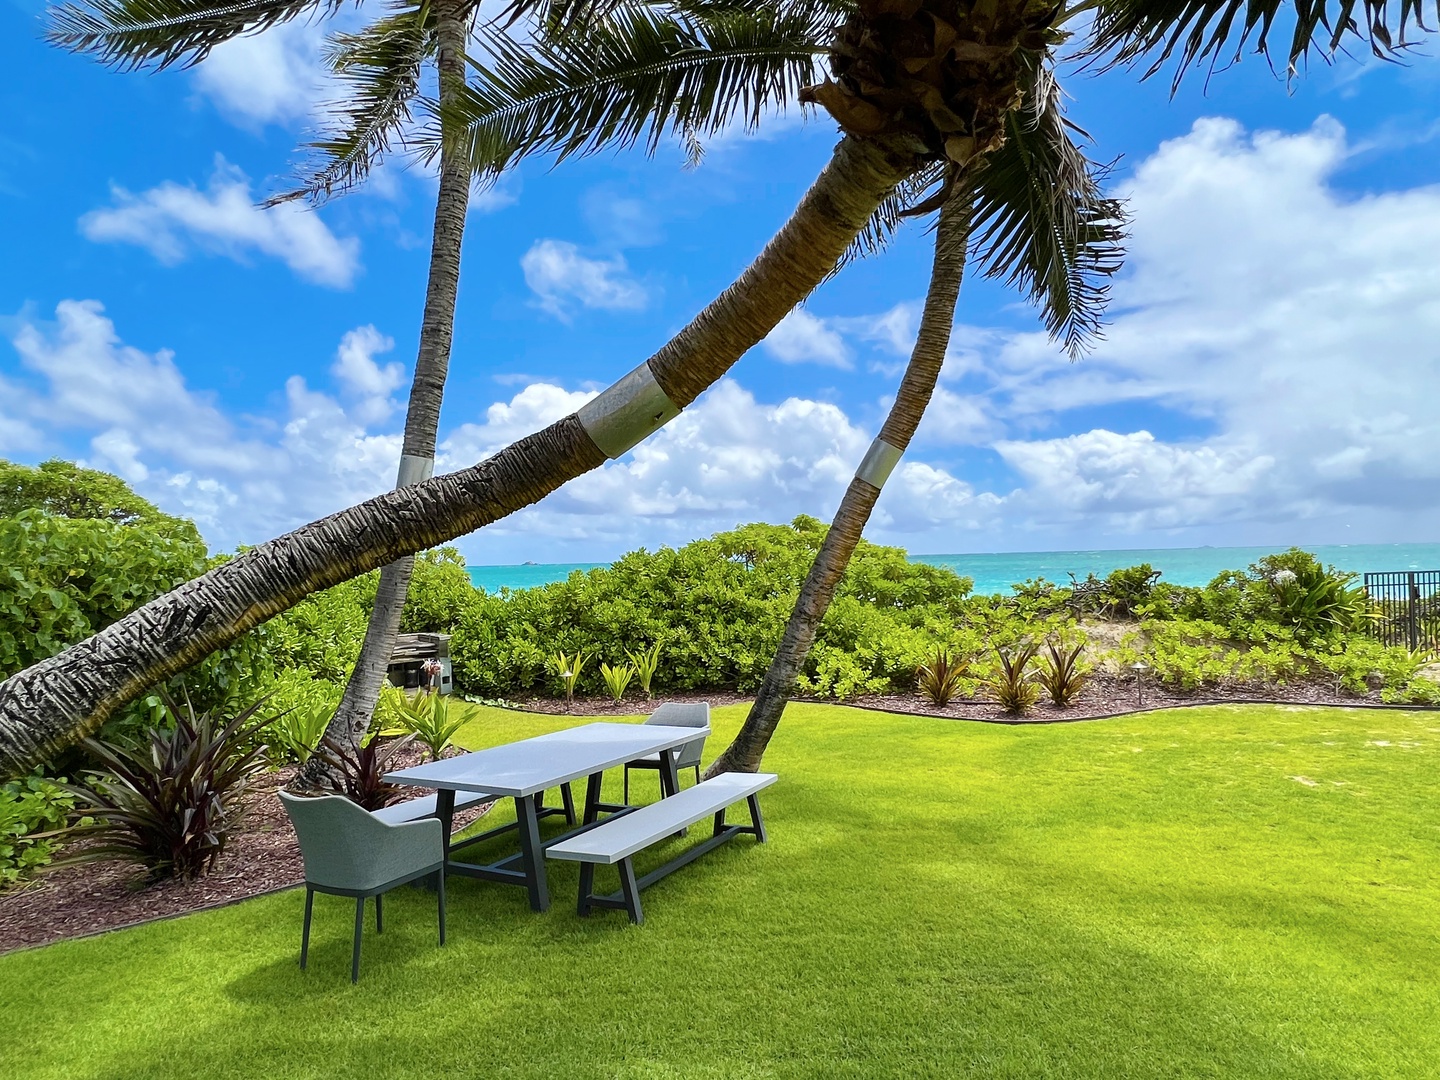 Kailua Vacation Rentals, Kailua Beach Villa - This beachfront villa is located on the famous shores of Kailua Beach.